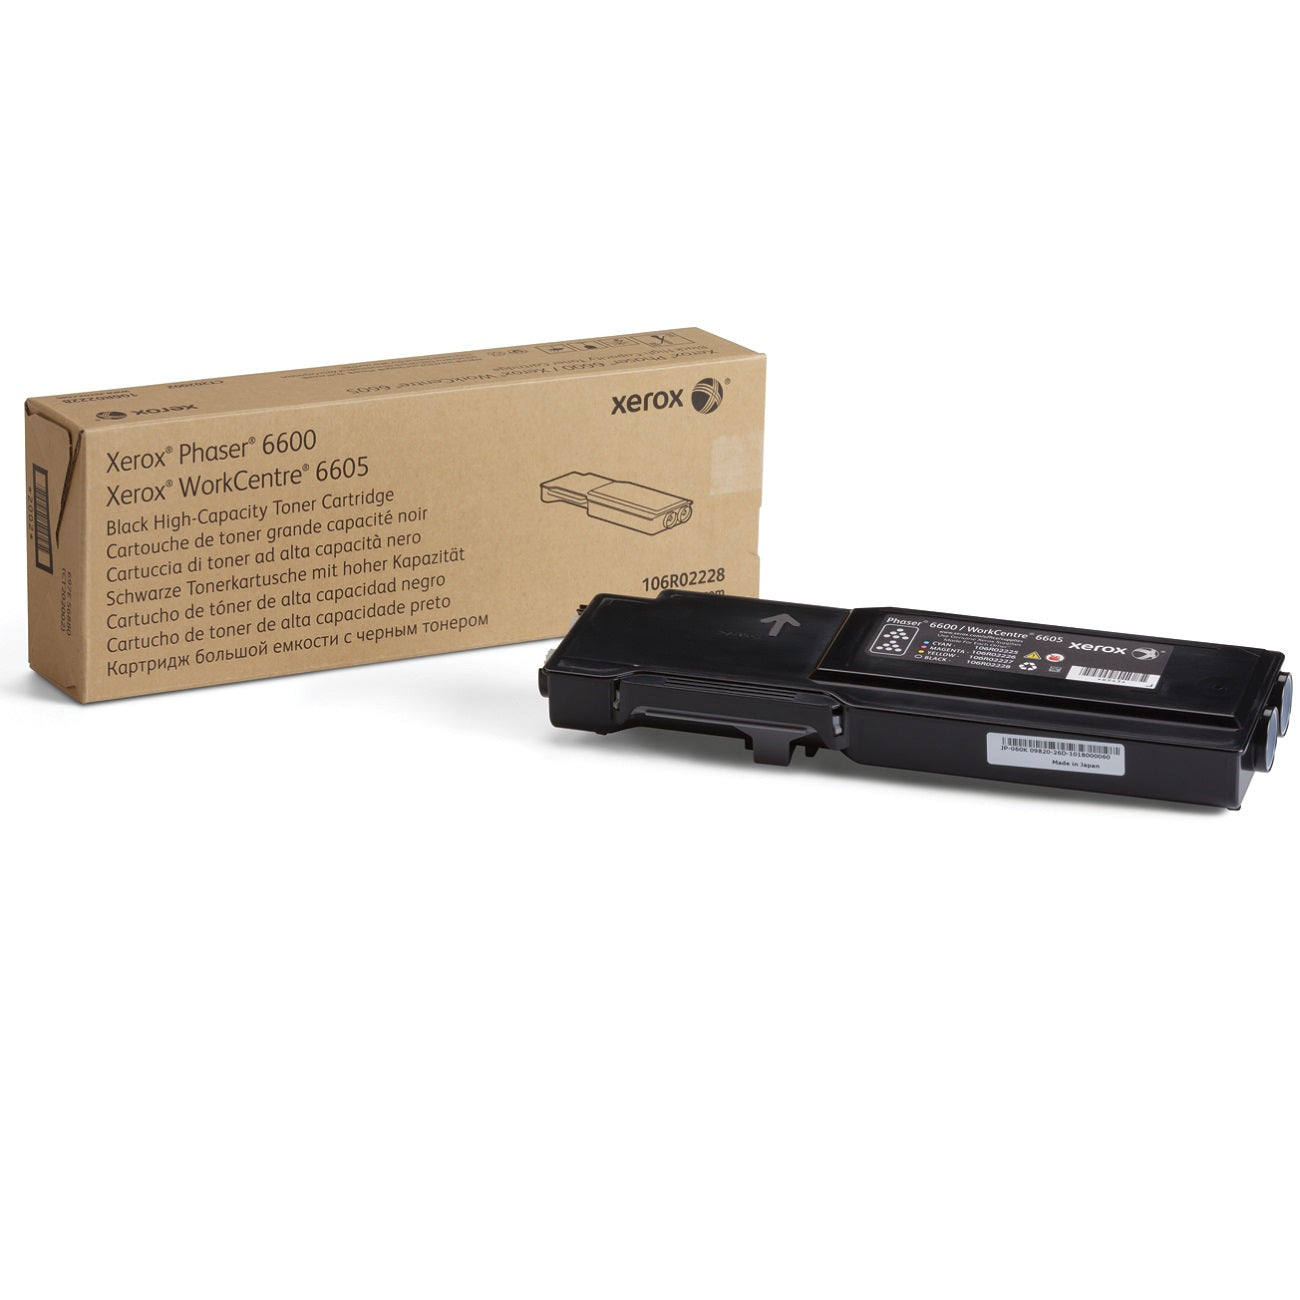 Absolute Toner Xerox 106R02228 Original Genuine OEM High Yield Black Laser Toner Cartridge Original Xerox Cartridges